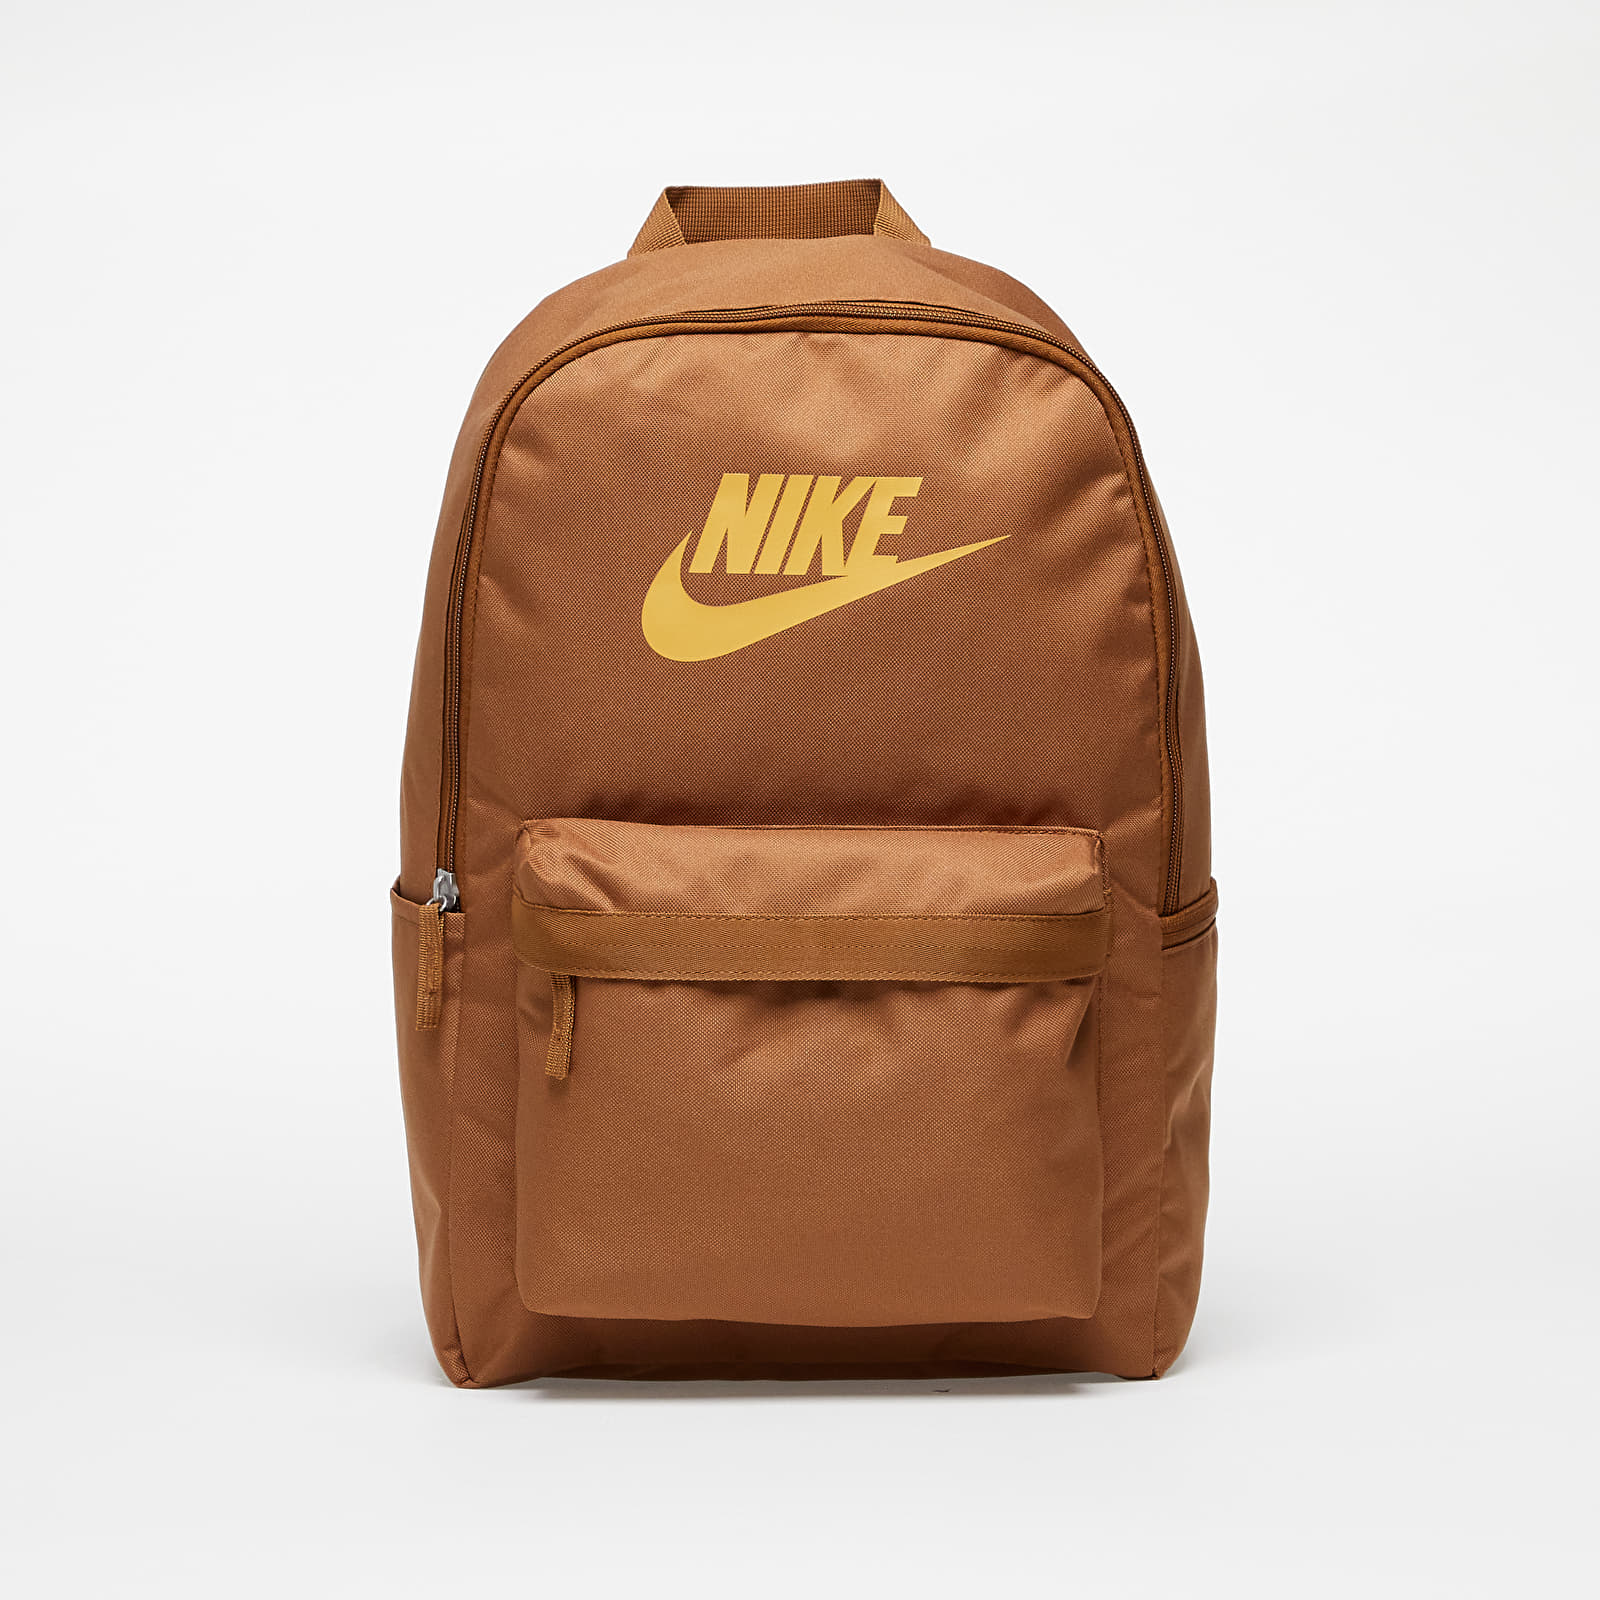 Ruksaci Nike Heritage Backpack Ale Brown/ Wheat Gold